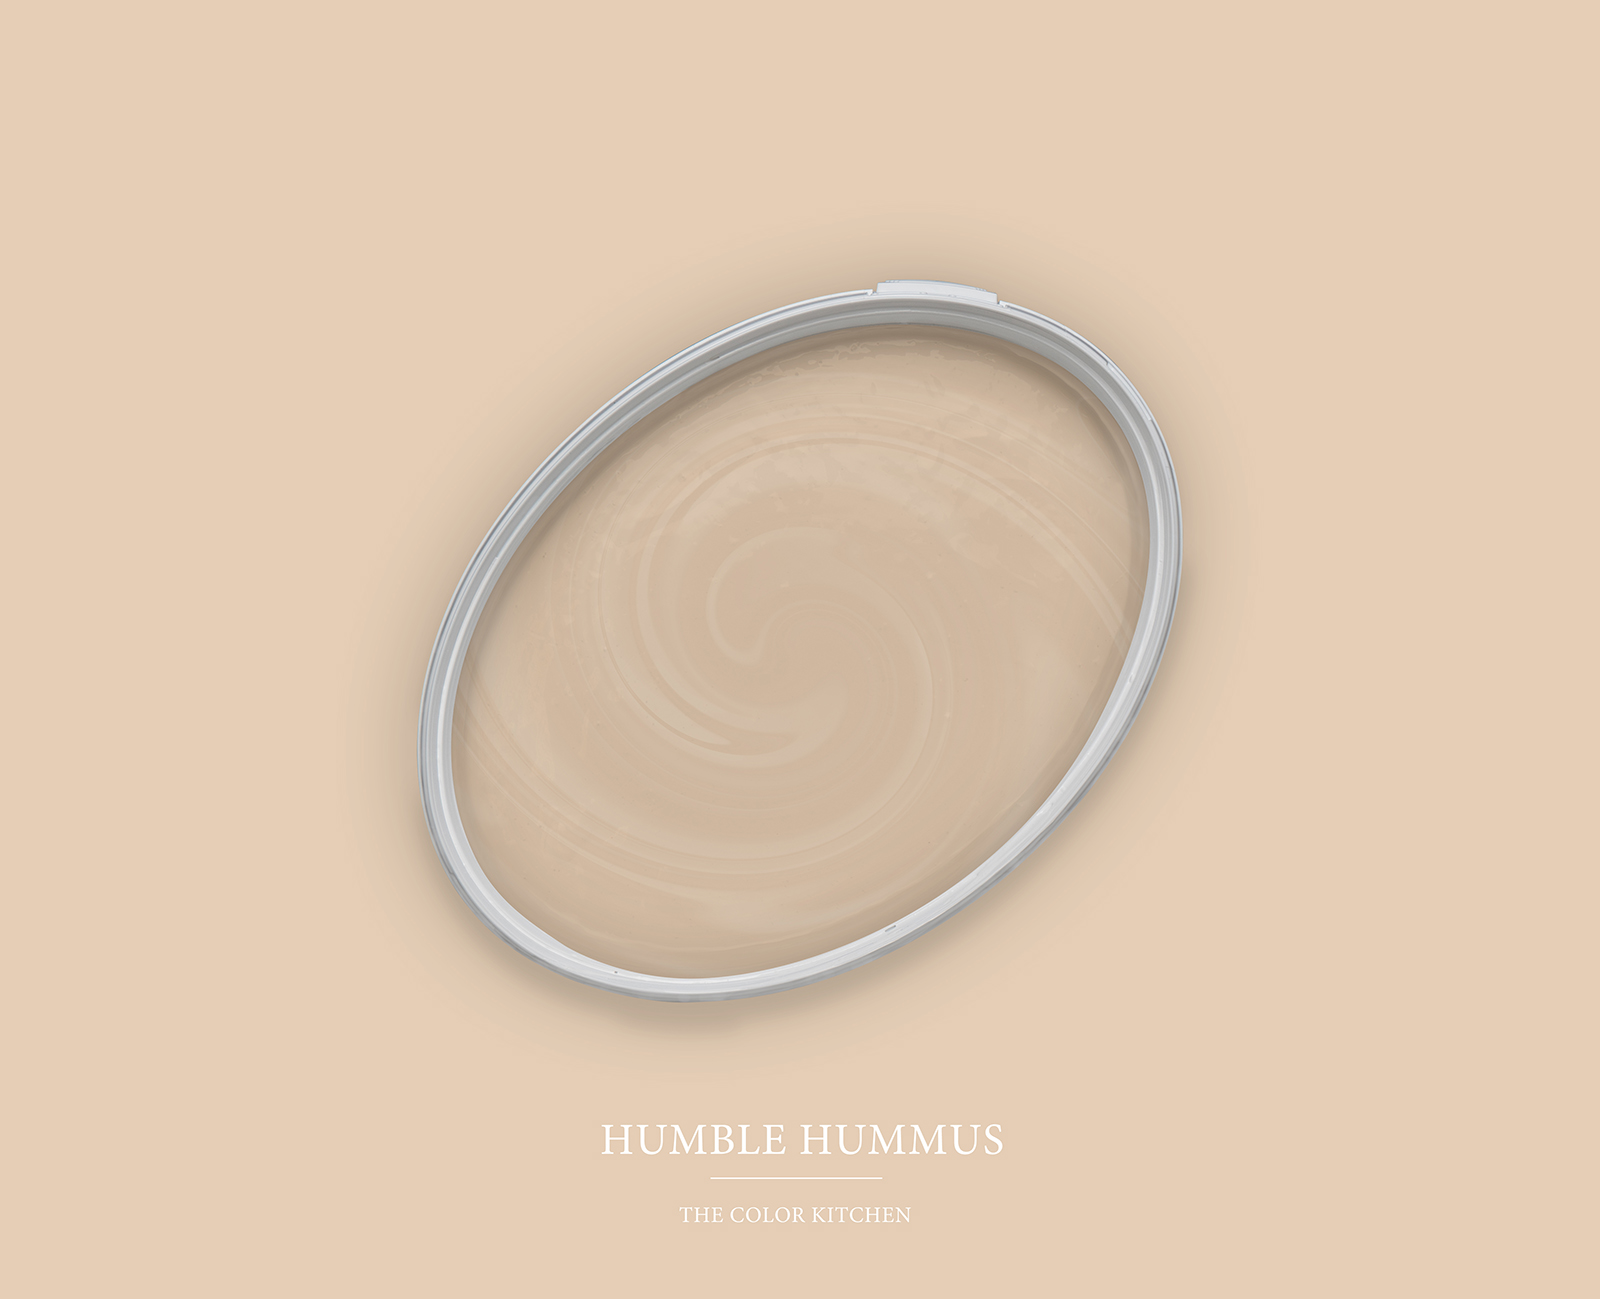         Wall Paint TCK5008 »Humble Hummus« in warm beige – 2.5 litre
    